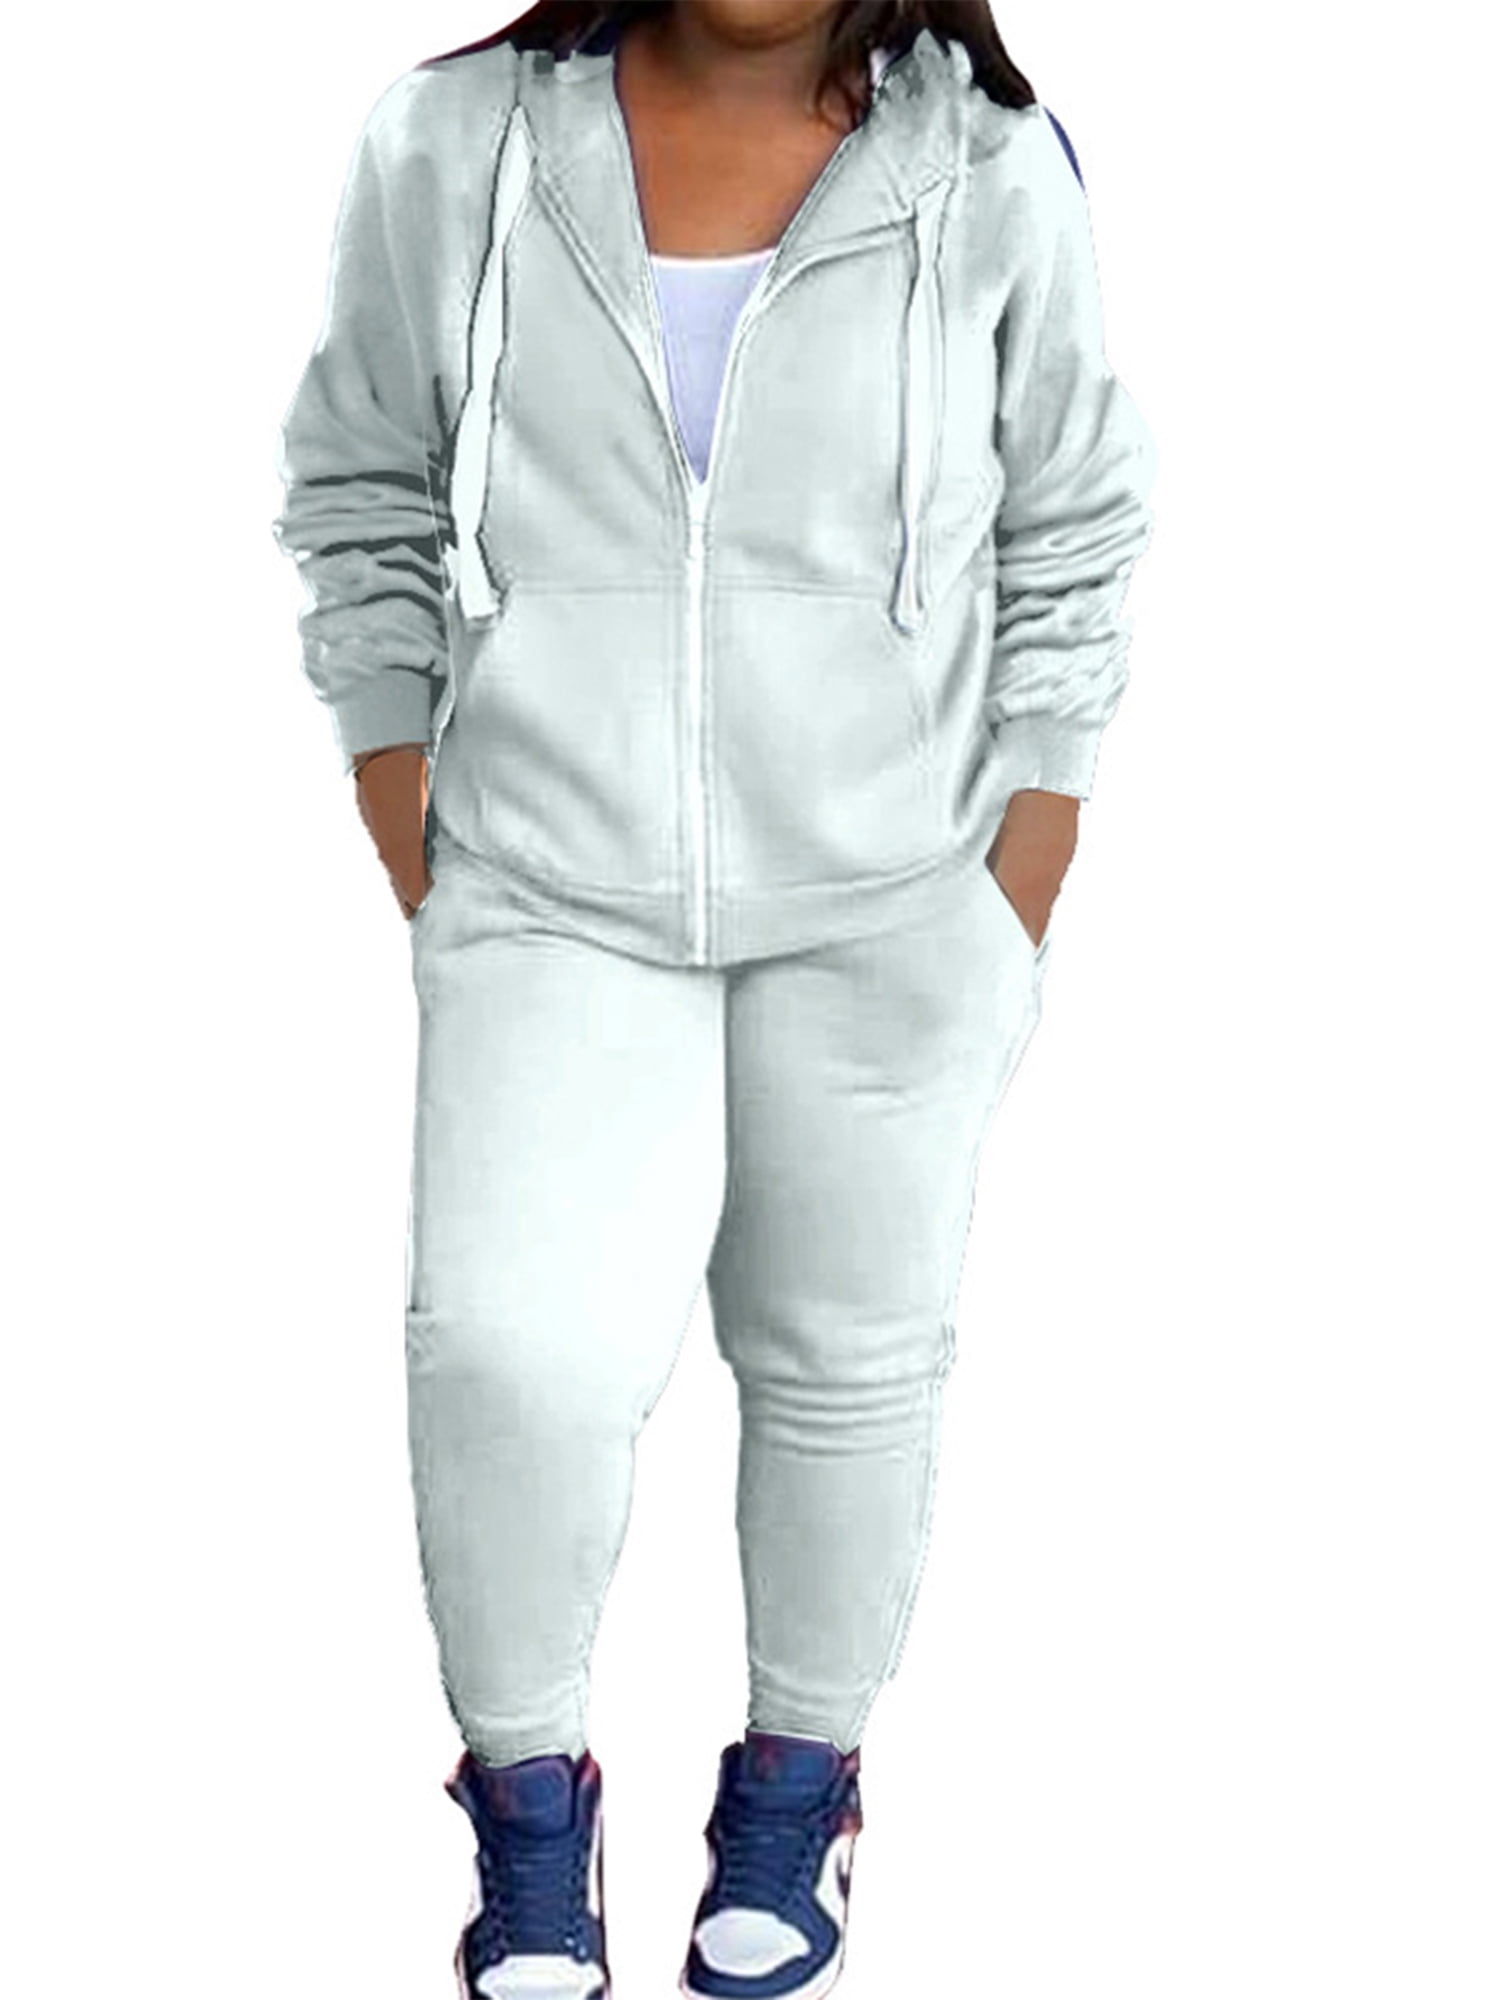 Cindysus Women Two Piece Outfit Plus Size Sweatsuit Hoodie Jogger Set  Casual Jogging Long Sleeve Tracksuit Sets Grey 3XL 